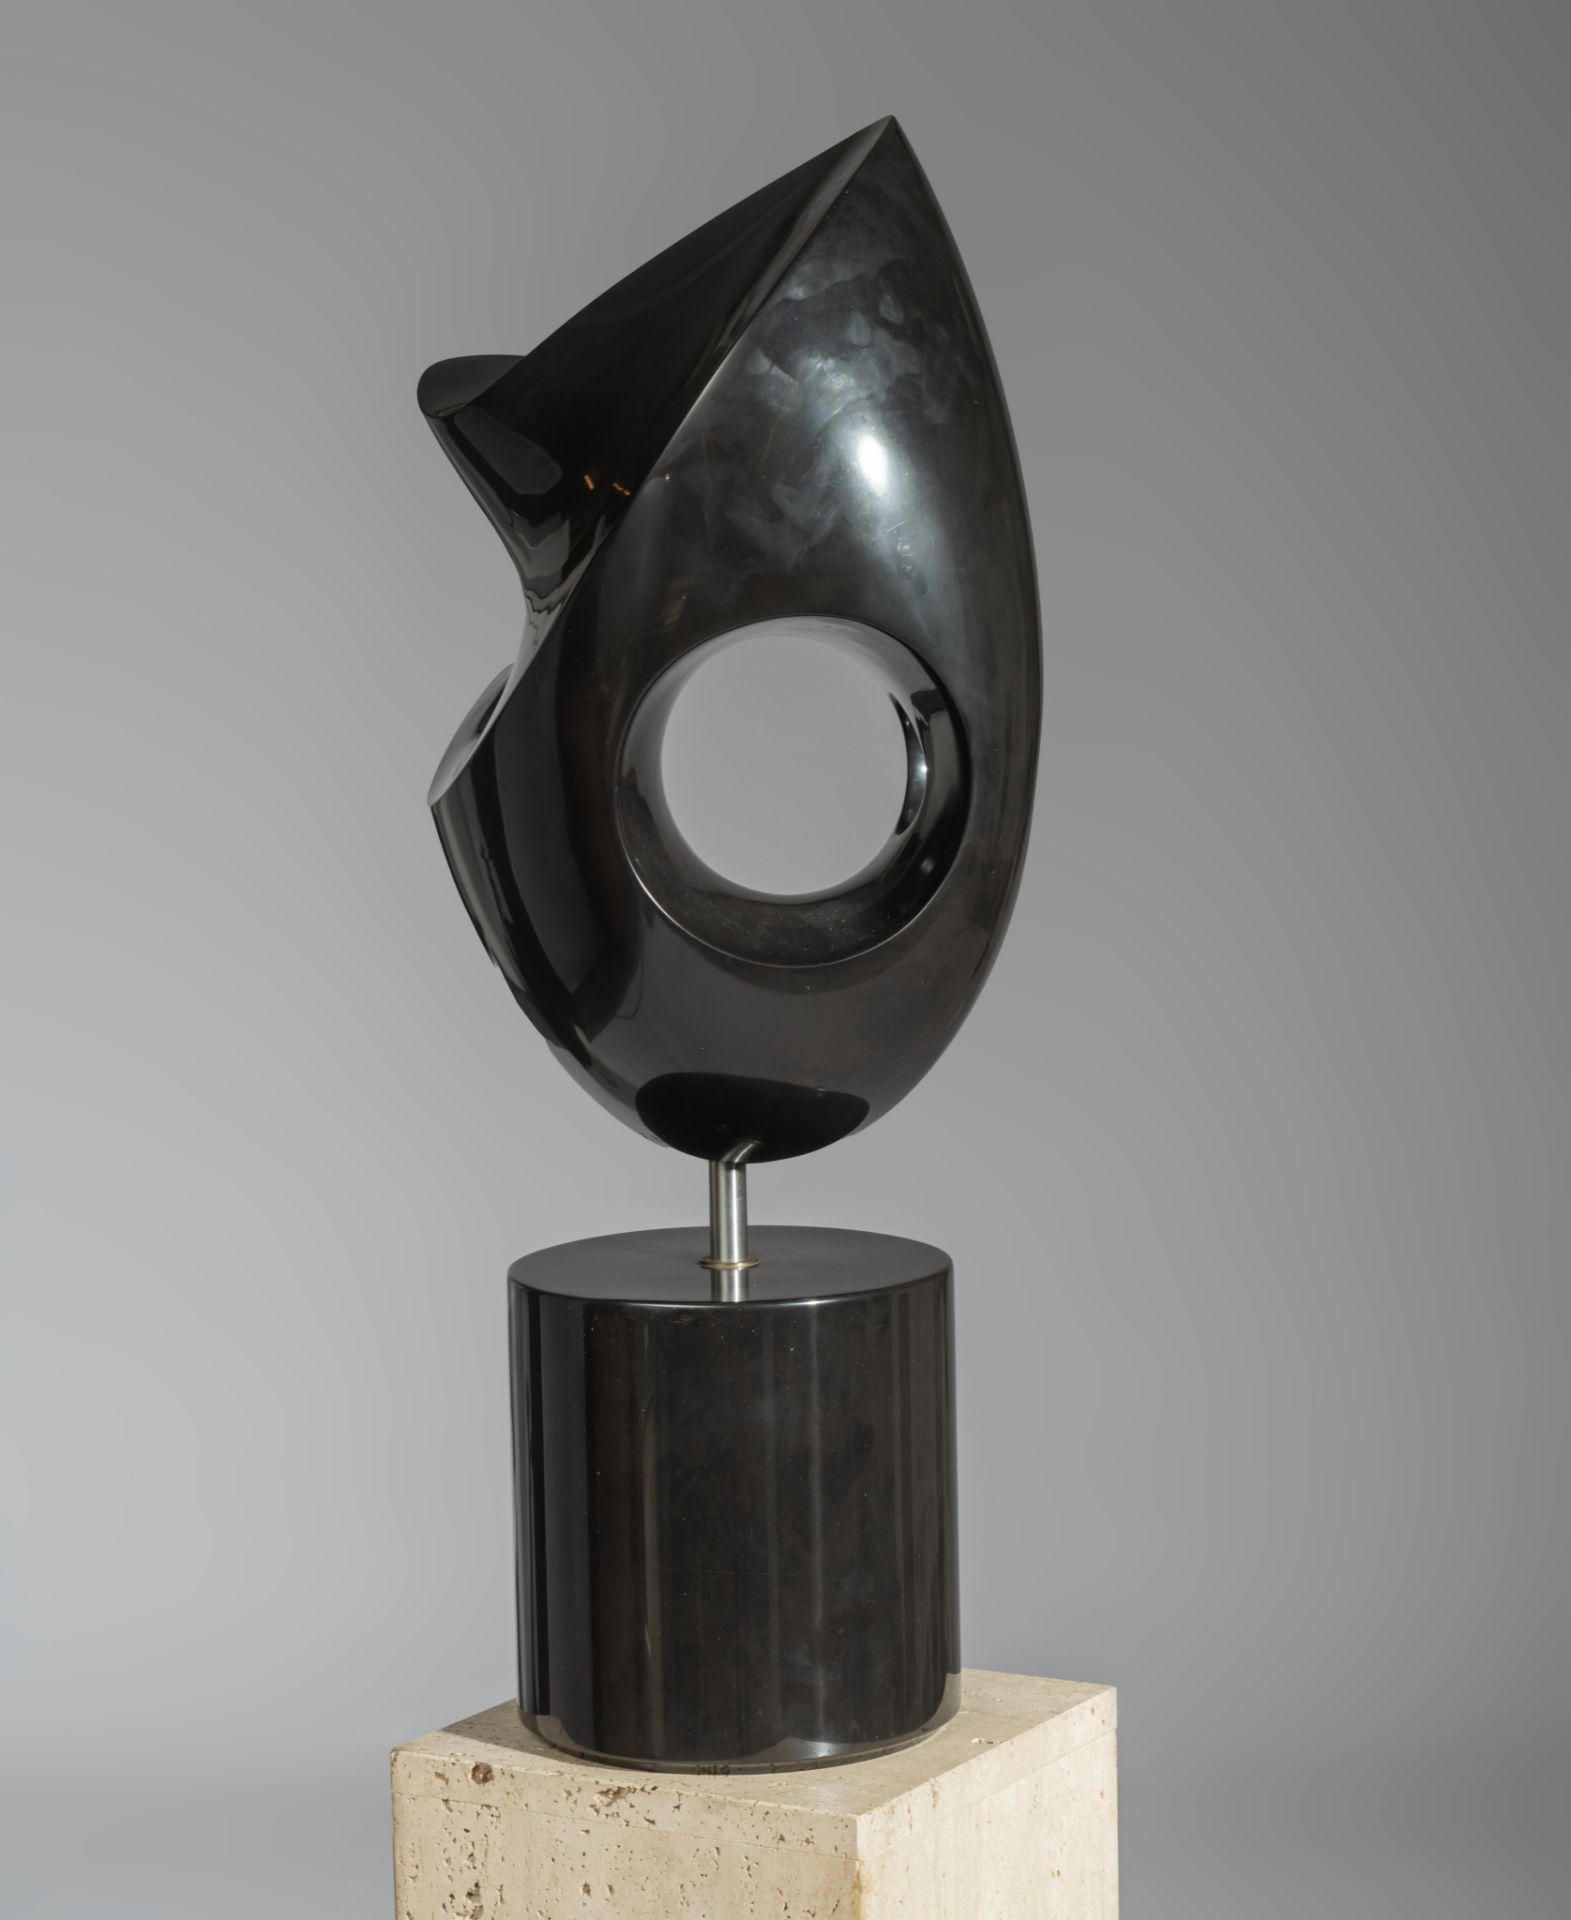 Jeanine Behaeghel (1940-1993), abstract sculpture, 1988, noir Belge marble on a travertine pedestal, - Image 5 of 18